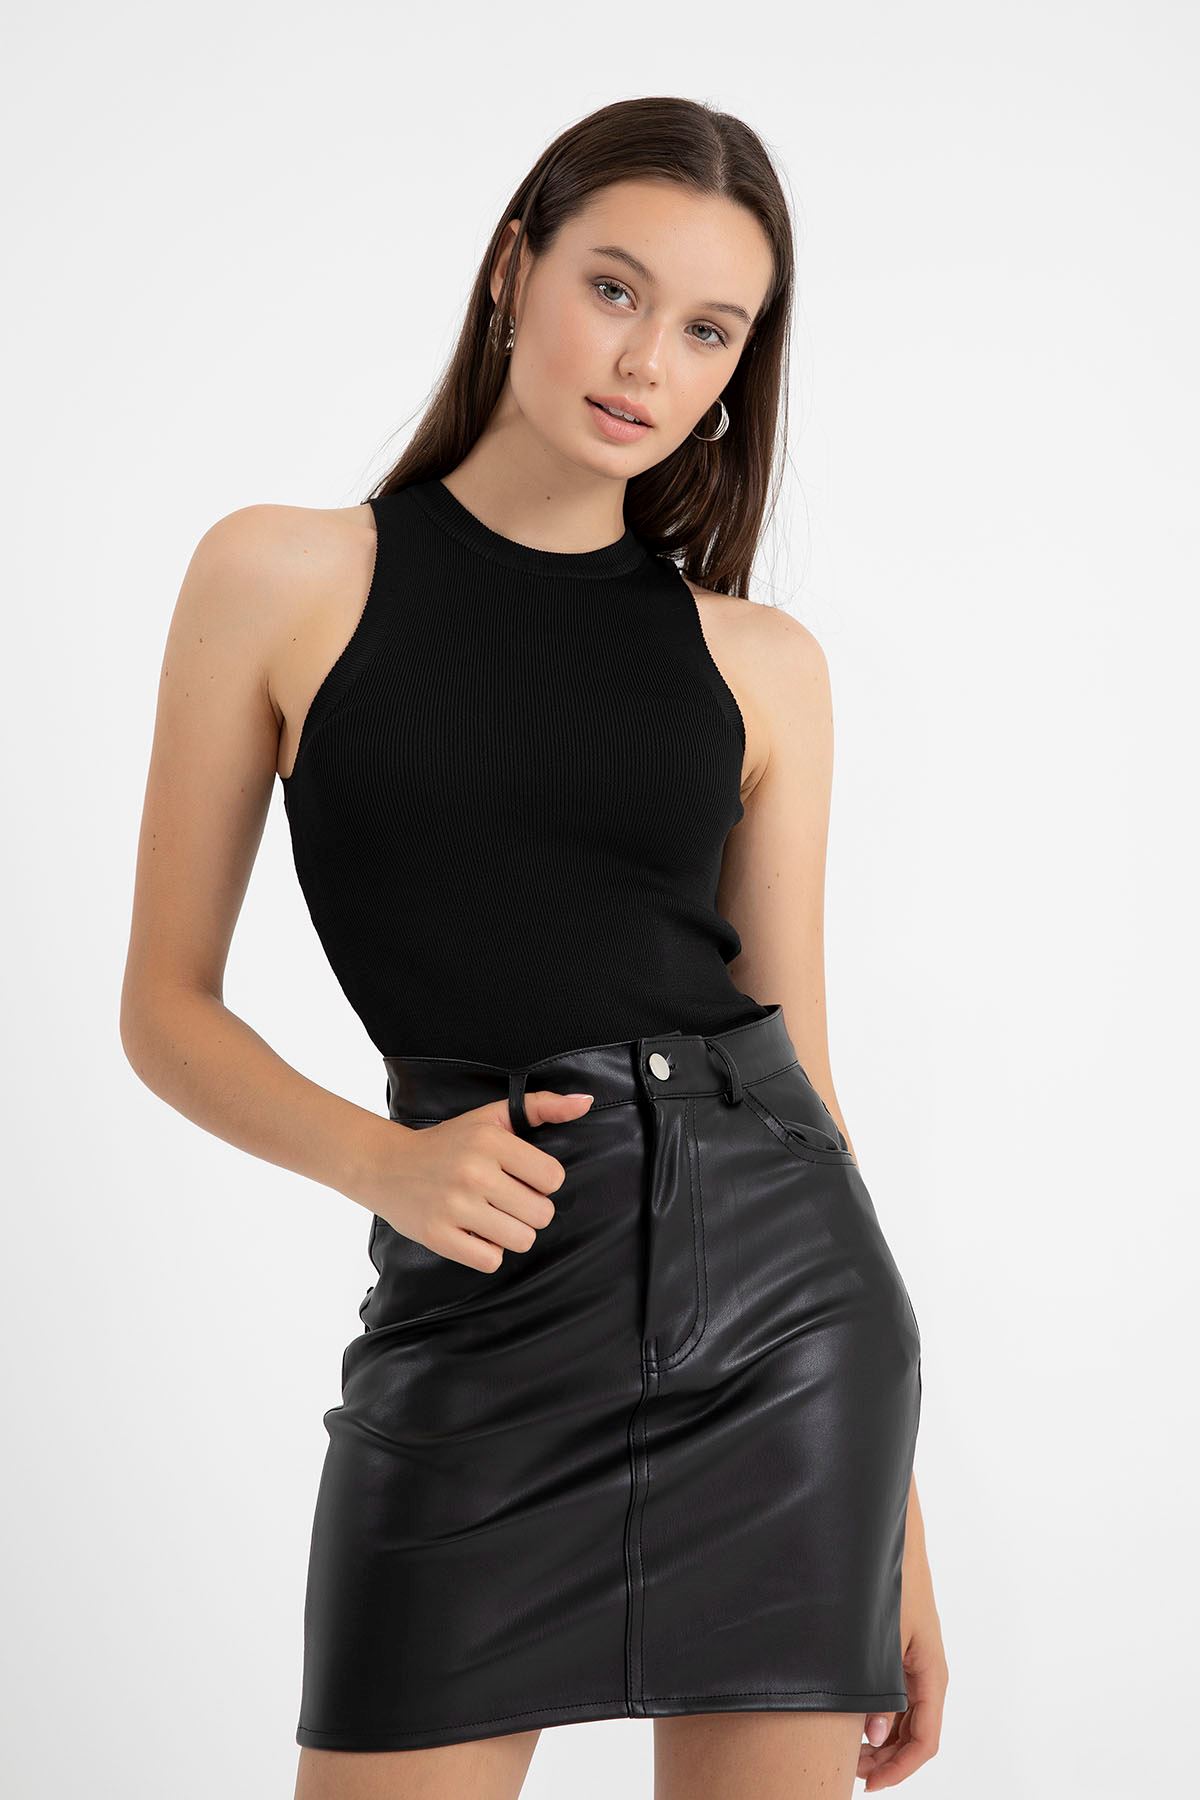 Leather Fabric Tight Fit Midi Skirt - Black